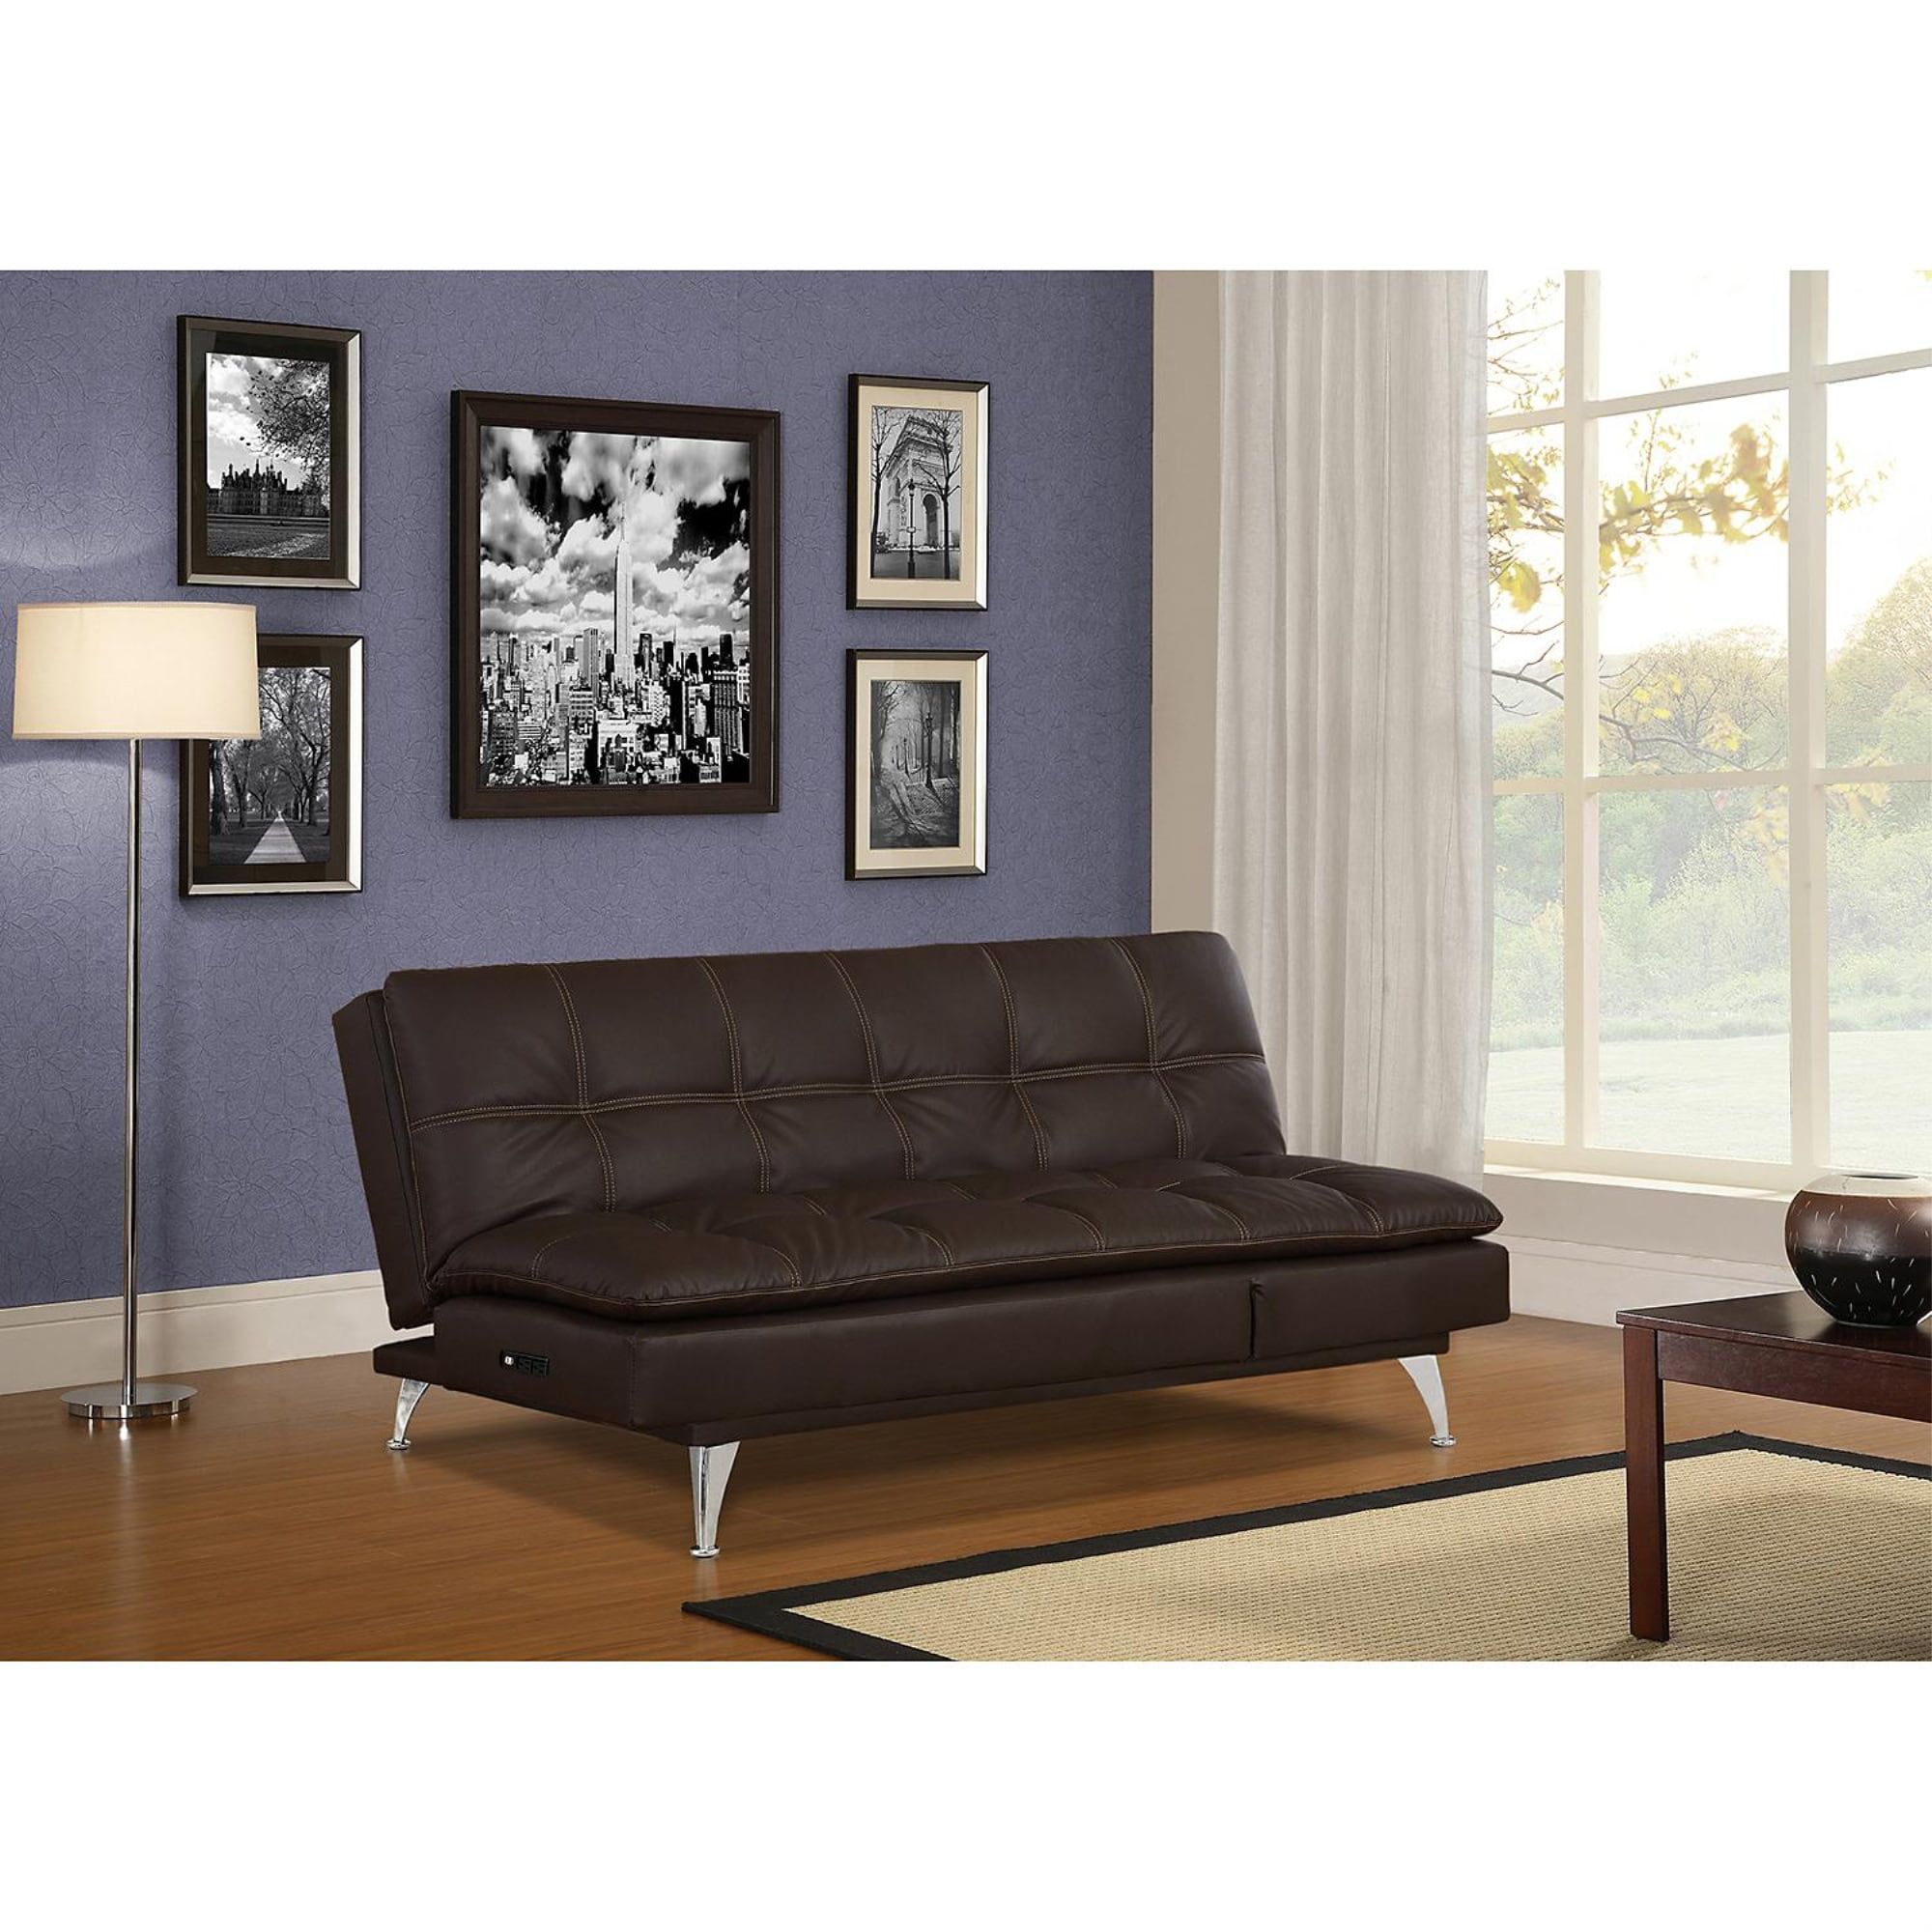 Serta Convertible Sofa Morgan | Baci Living Room Intended For 8 Seat Convertible Sofas (Gallery 4 of 20)